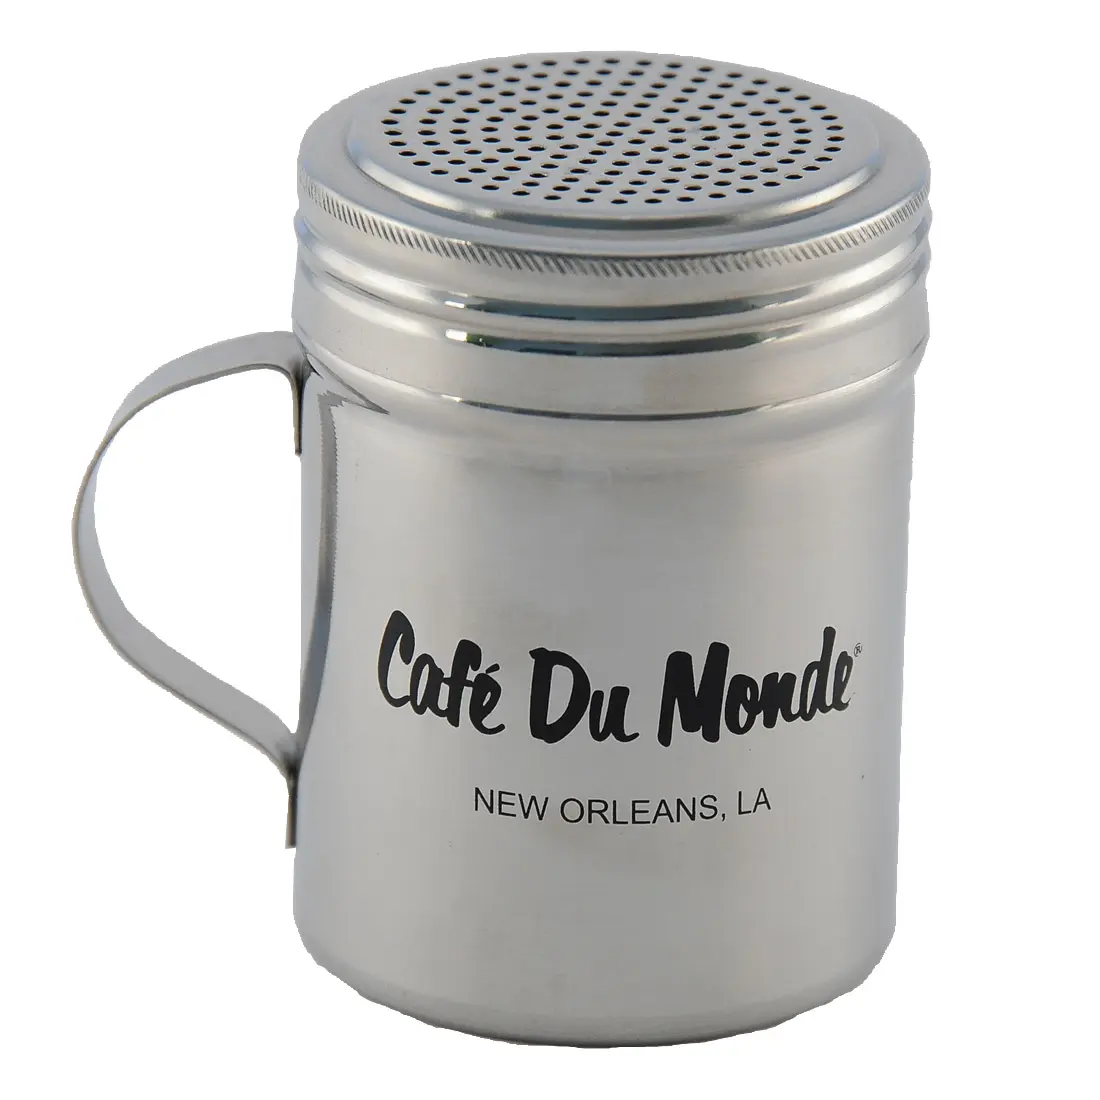 Powdered Stainless Steel Sugar Shaker • Cafe Du Monde New Orleans